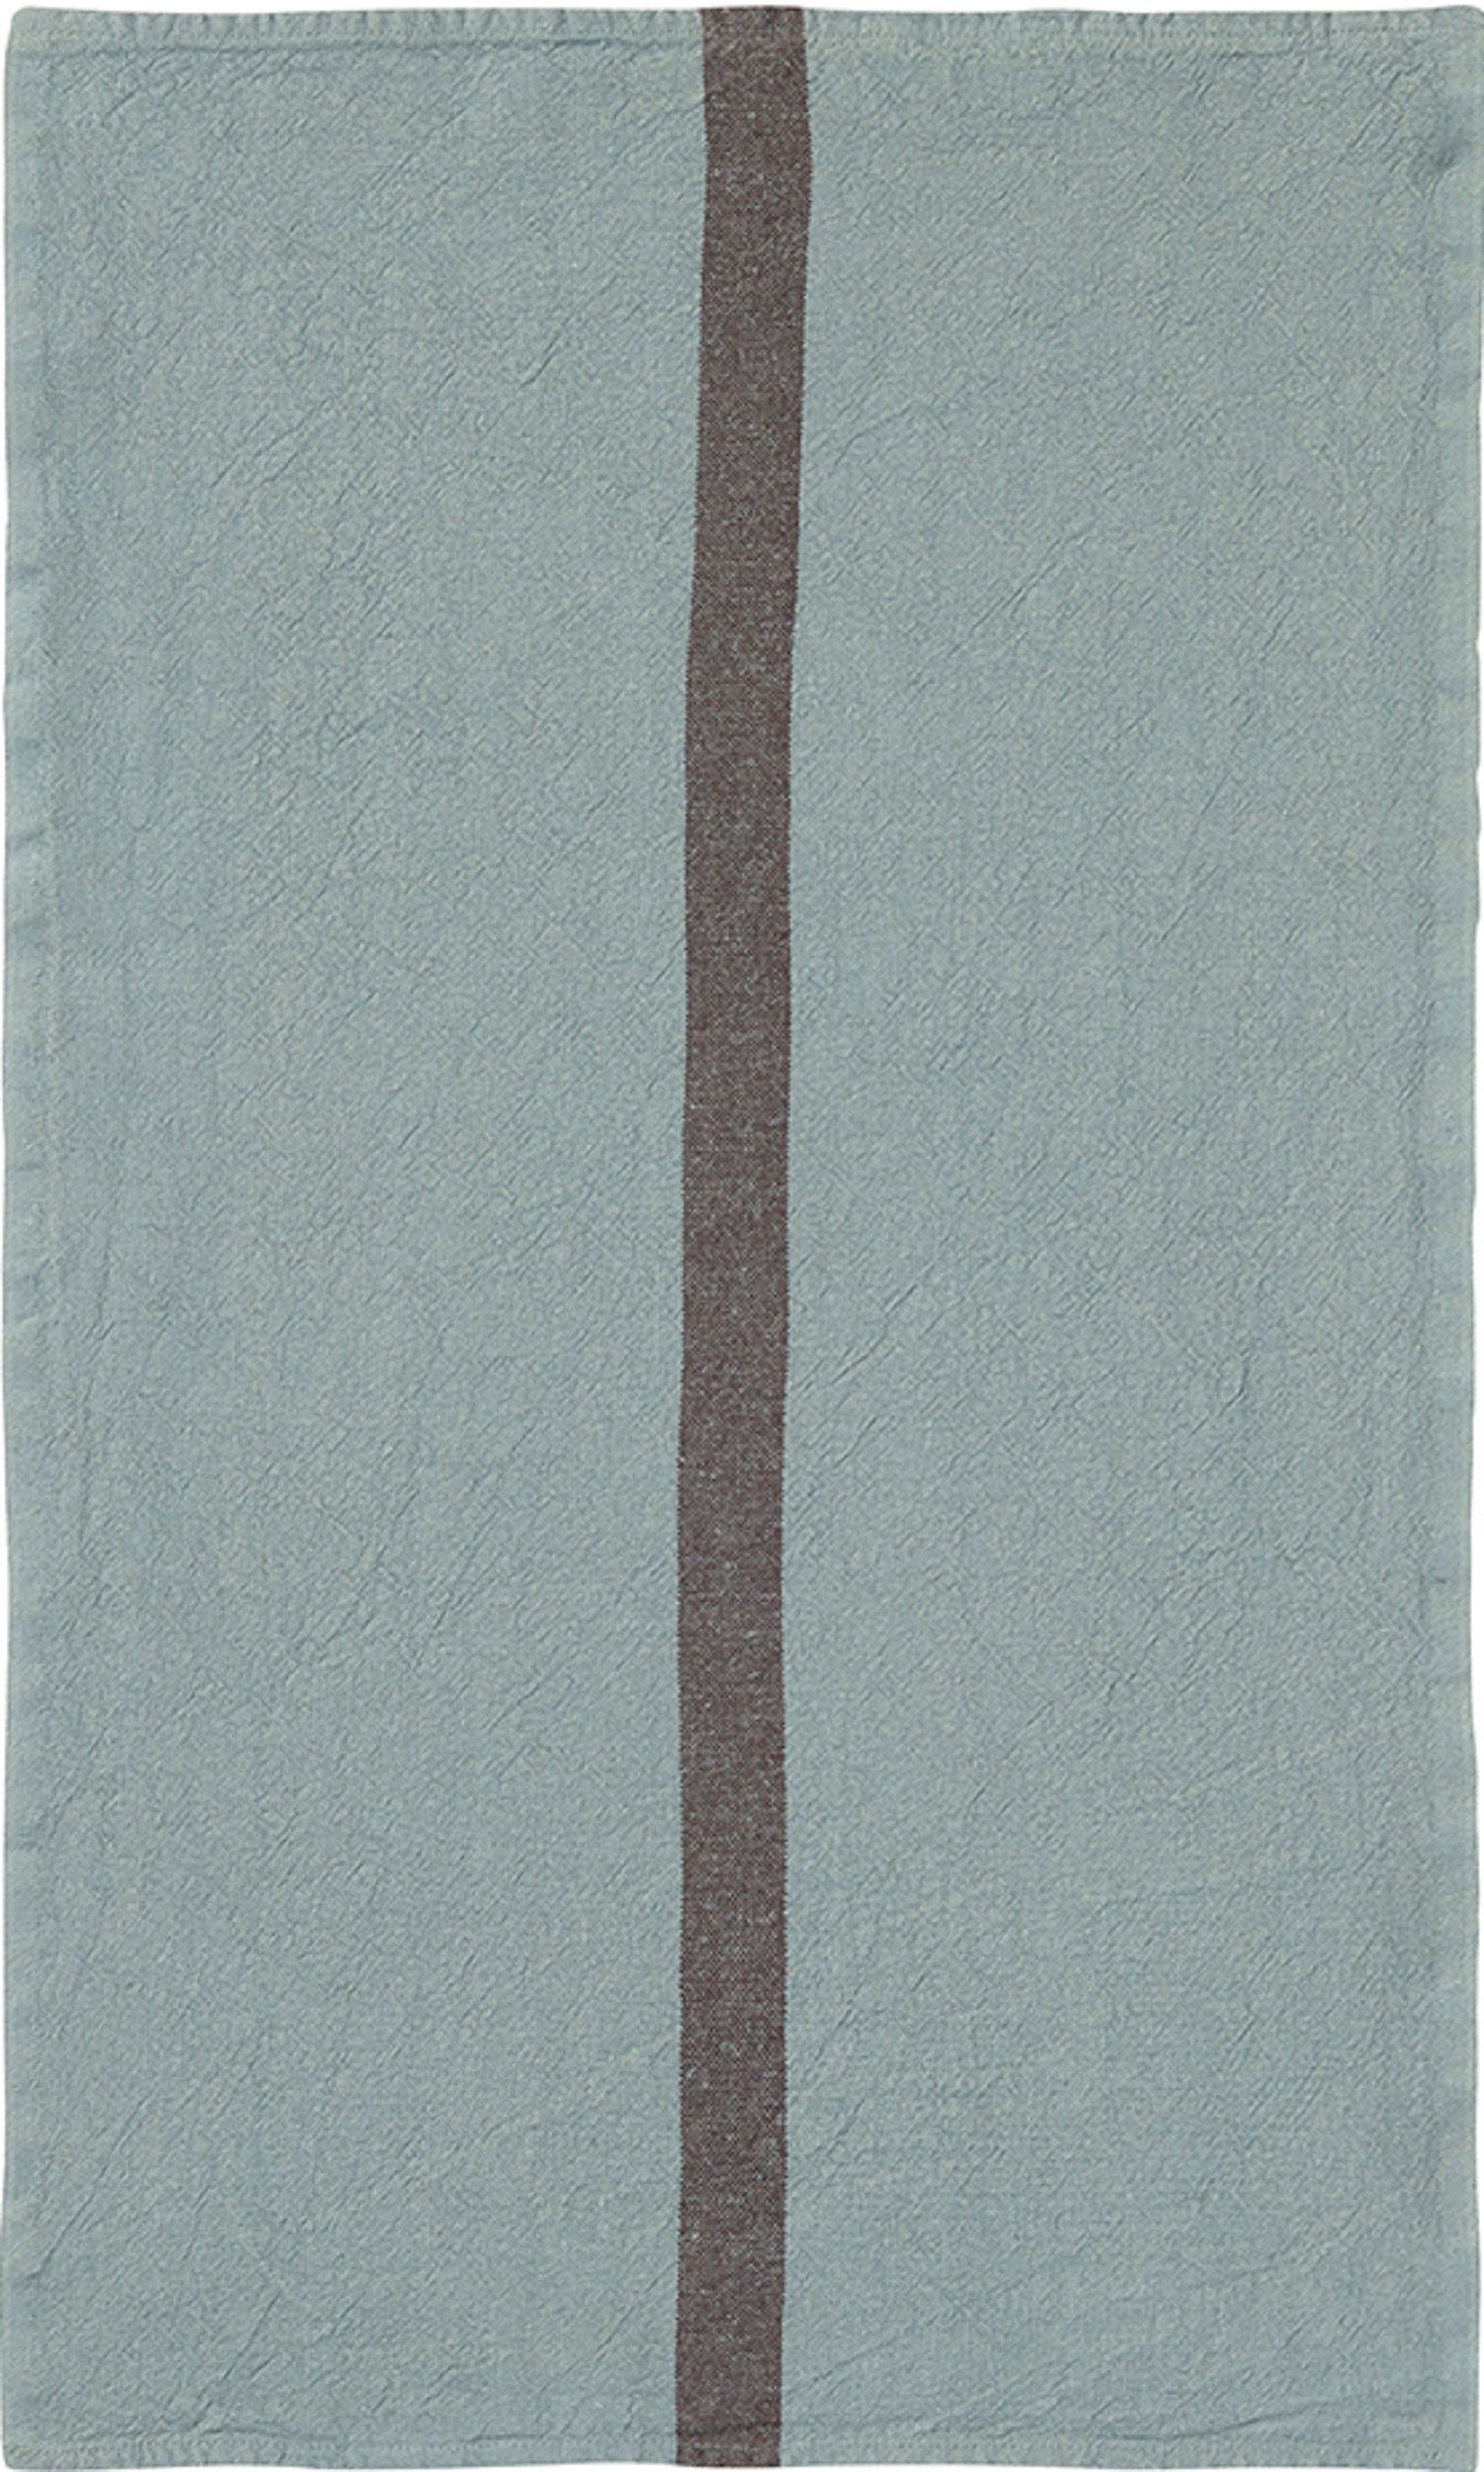 Charvet Editions "Doudou Stripe" (Vert-de-gris & Marron), Natural woven linen tea towel. Made in France.